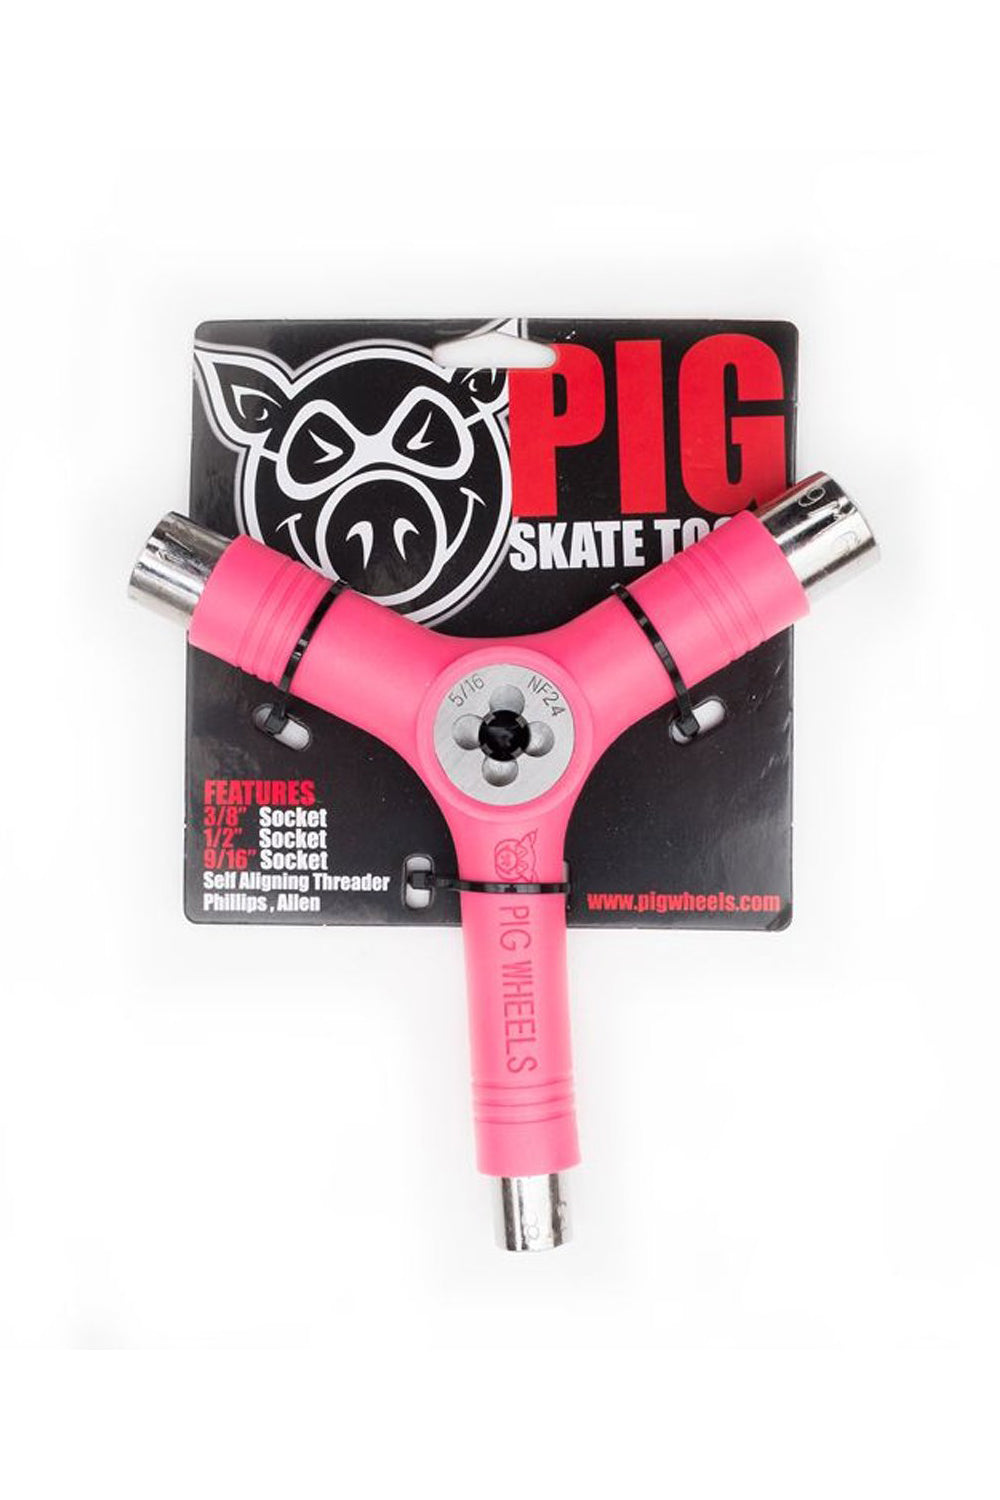 PIG Skate Tool